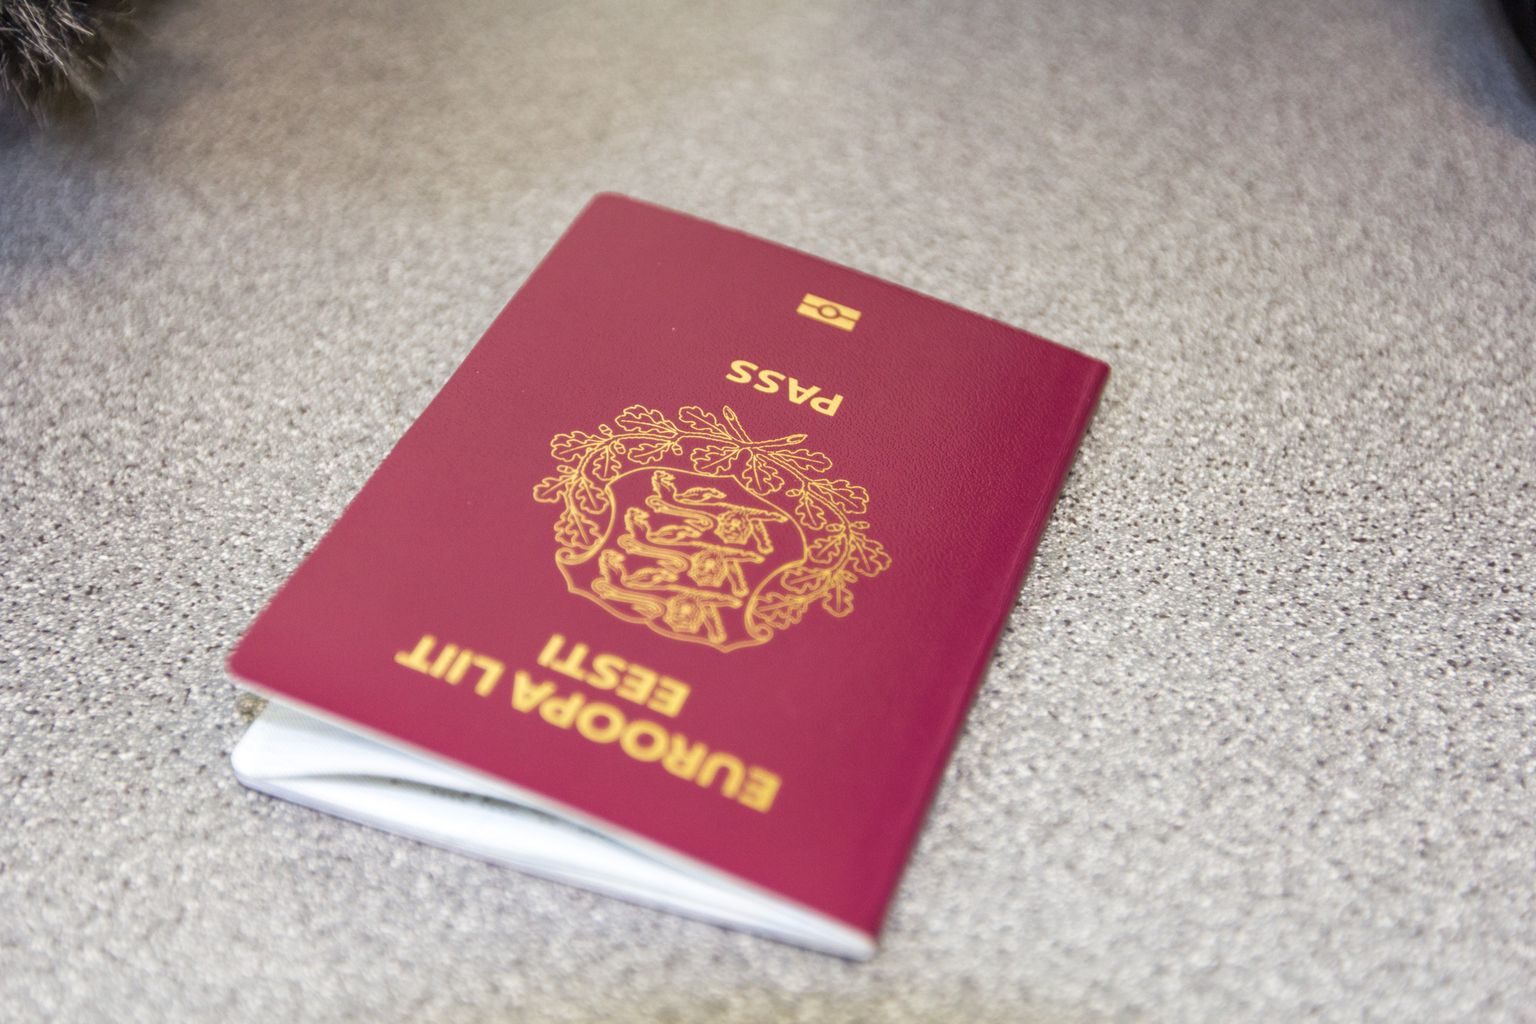 Eesti kodaniku pass. Isikut tõendav dokument.